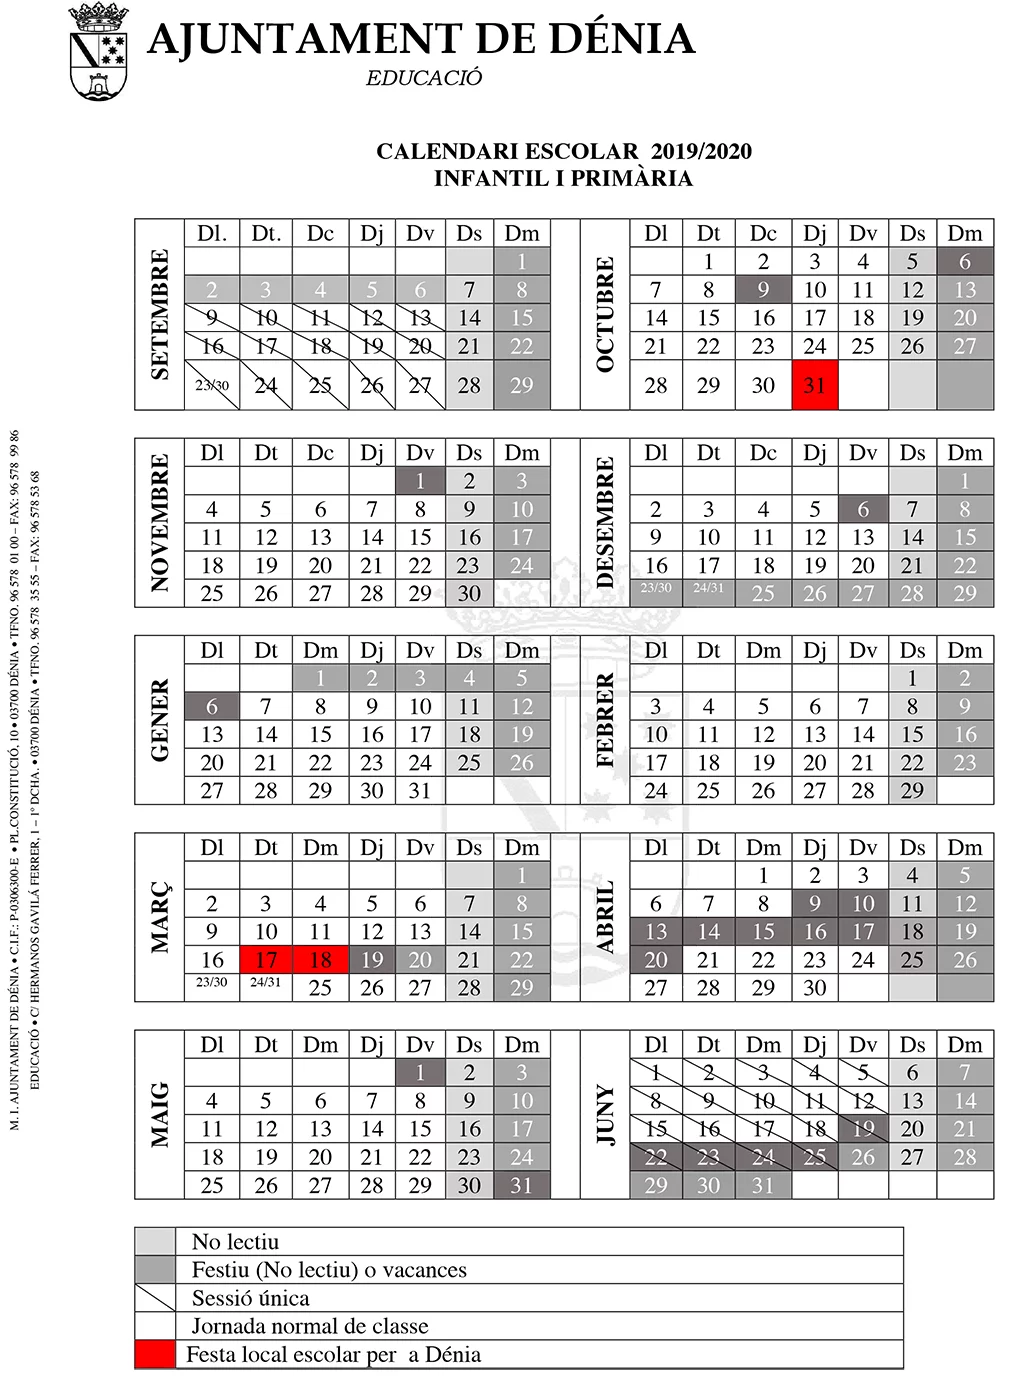 Calendario Infantil y Primaria